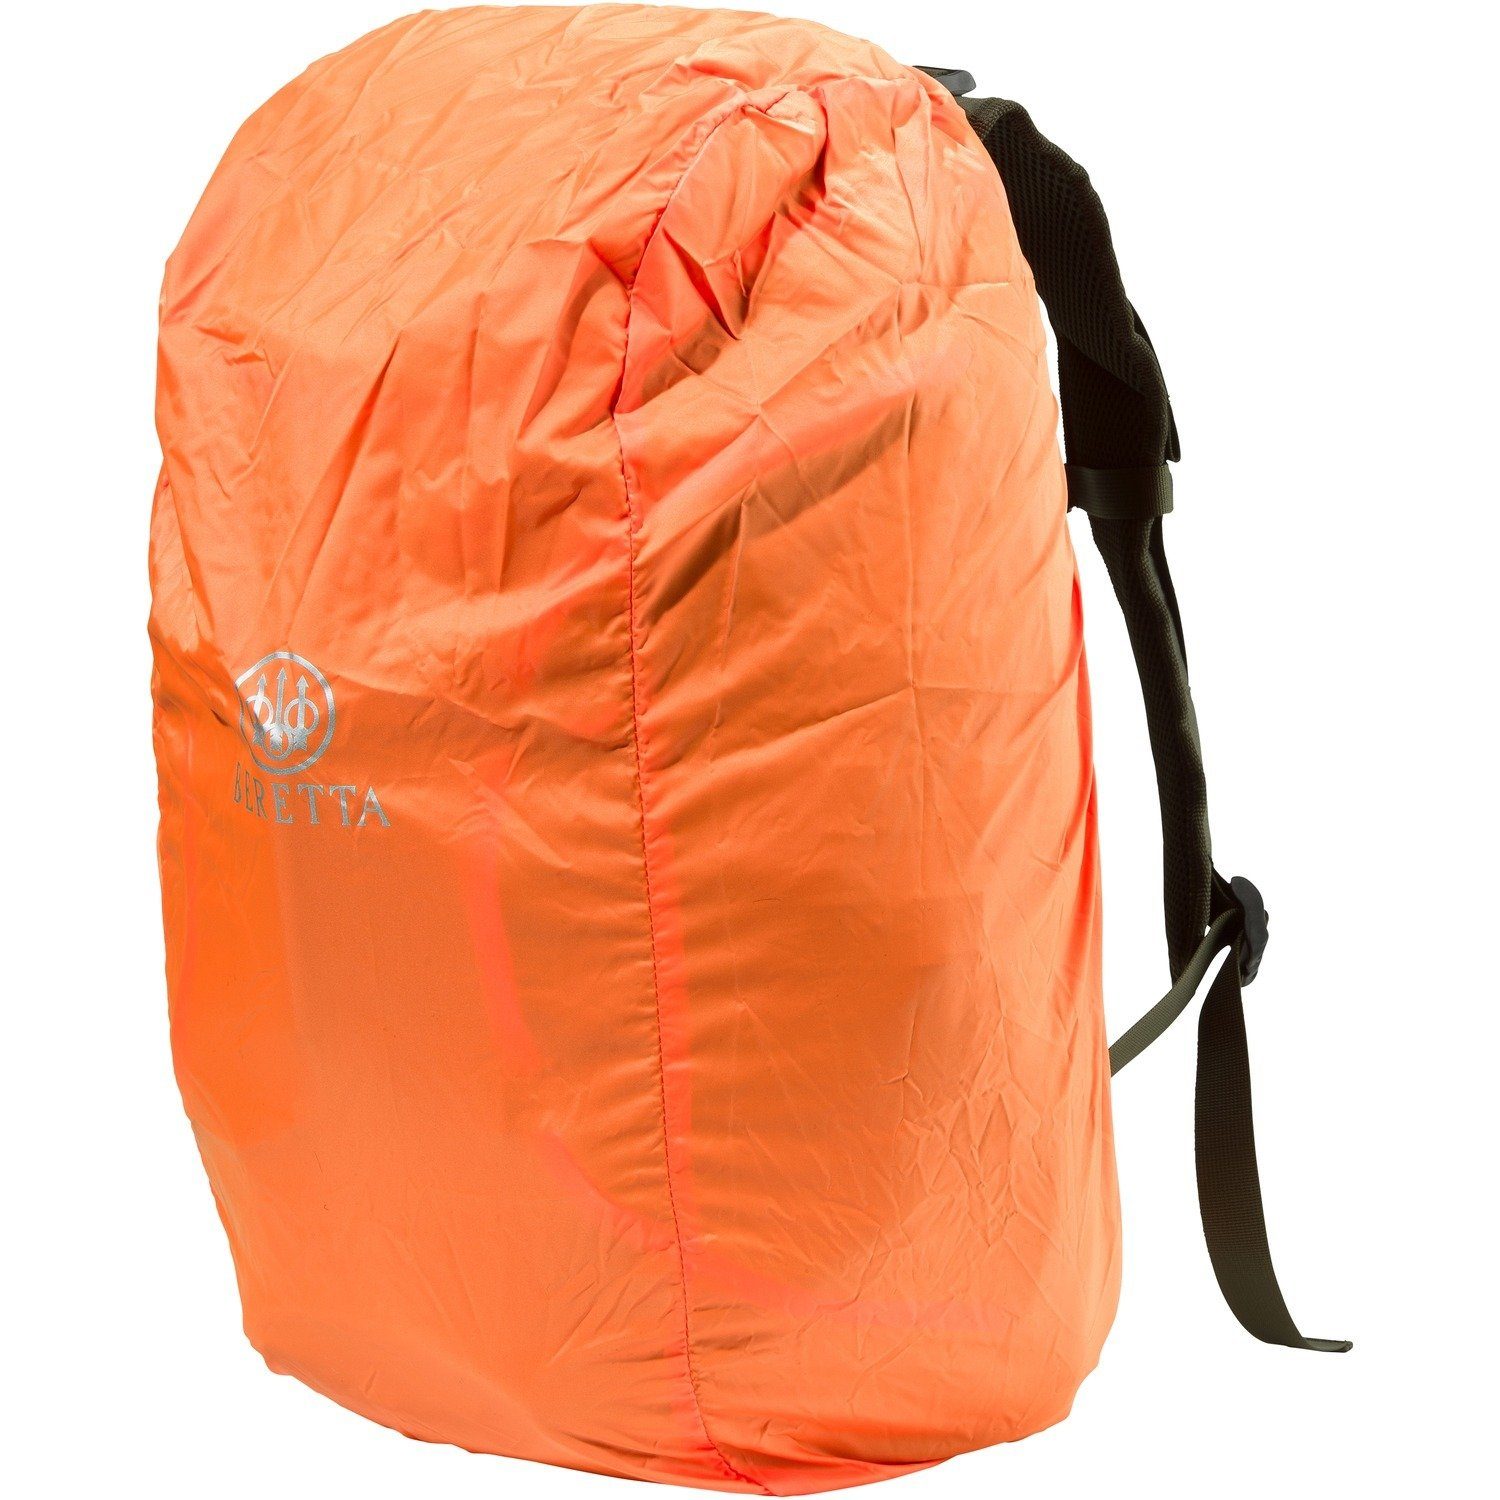 Damen Rucksäcke Beretta Freizeitrucksack Rucksack Modular Backpack 35 Liter